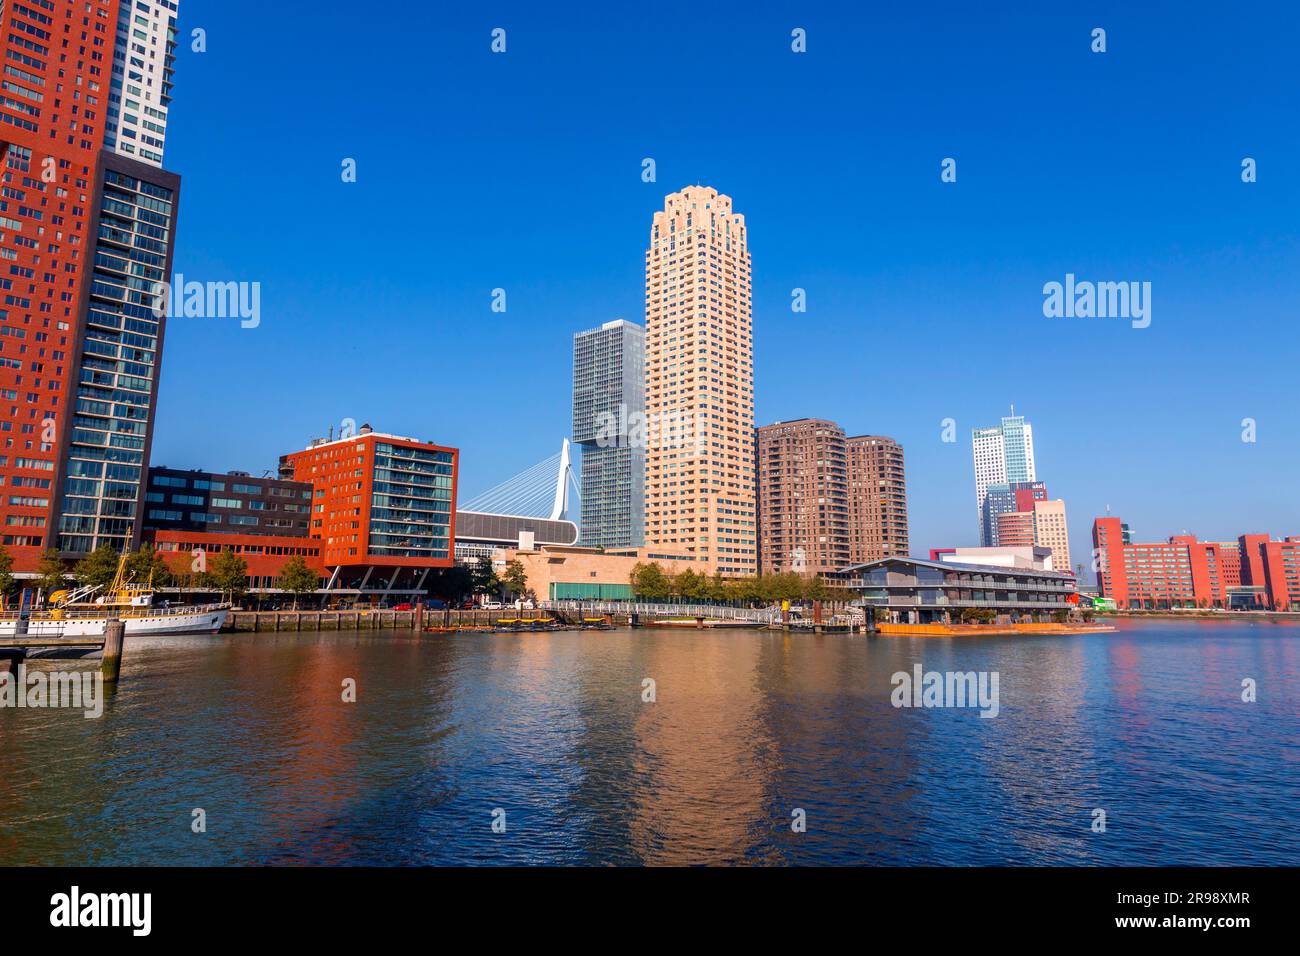 Rotterdam, Paesi Bassi - 8 ottobre 2021: Moderne torri commerciali situate lungo la riva del fiume Nieuwe Maas, Rotterdam, Paesi Bassi. Foto Stock